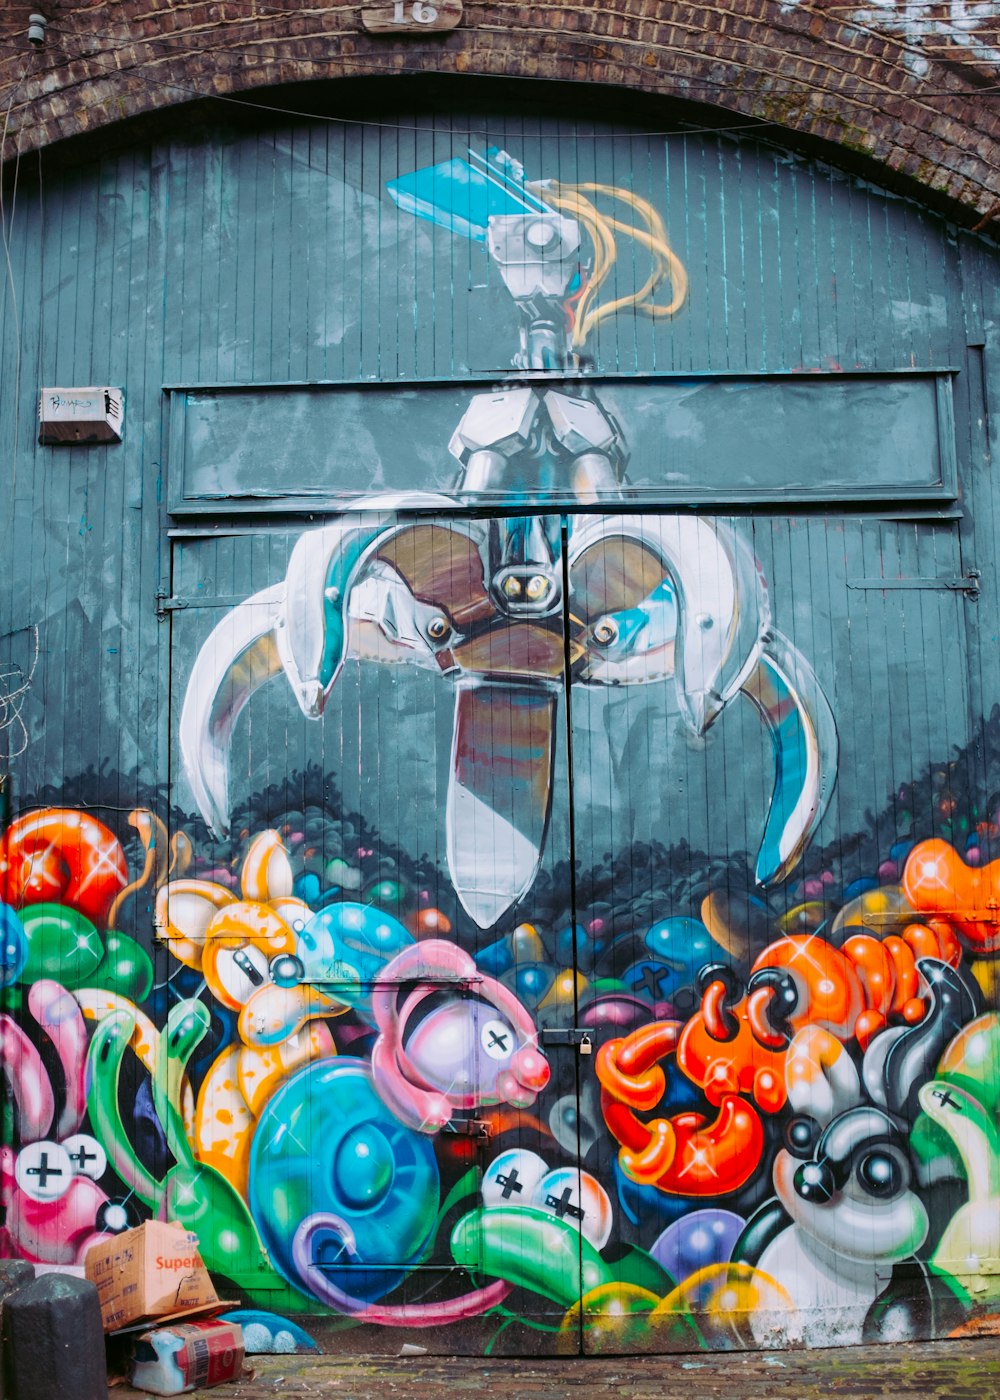 mural painting photo – Free Graffiti Image on Unsplash